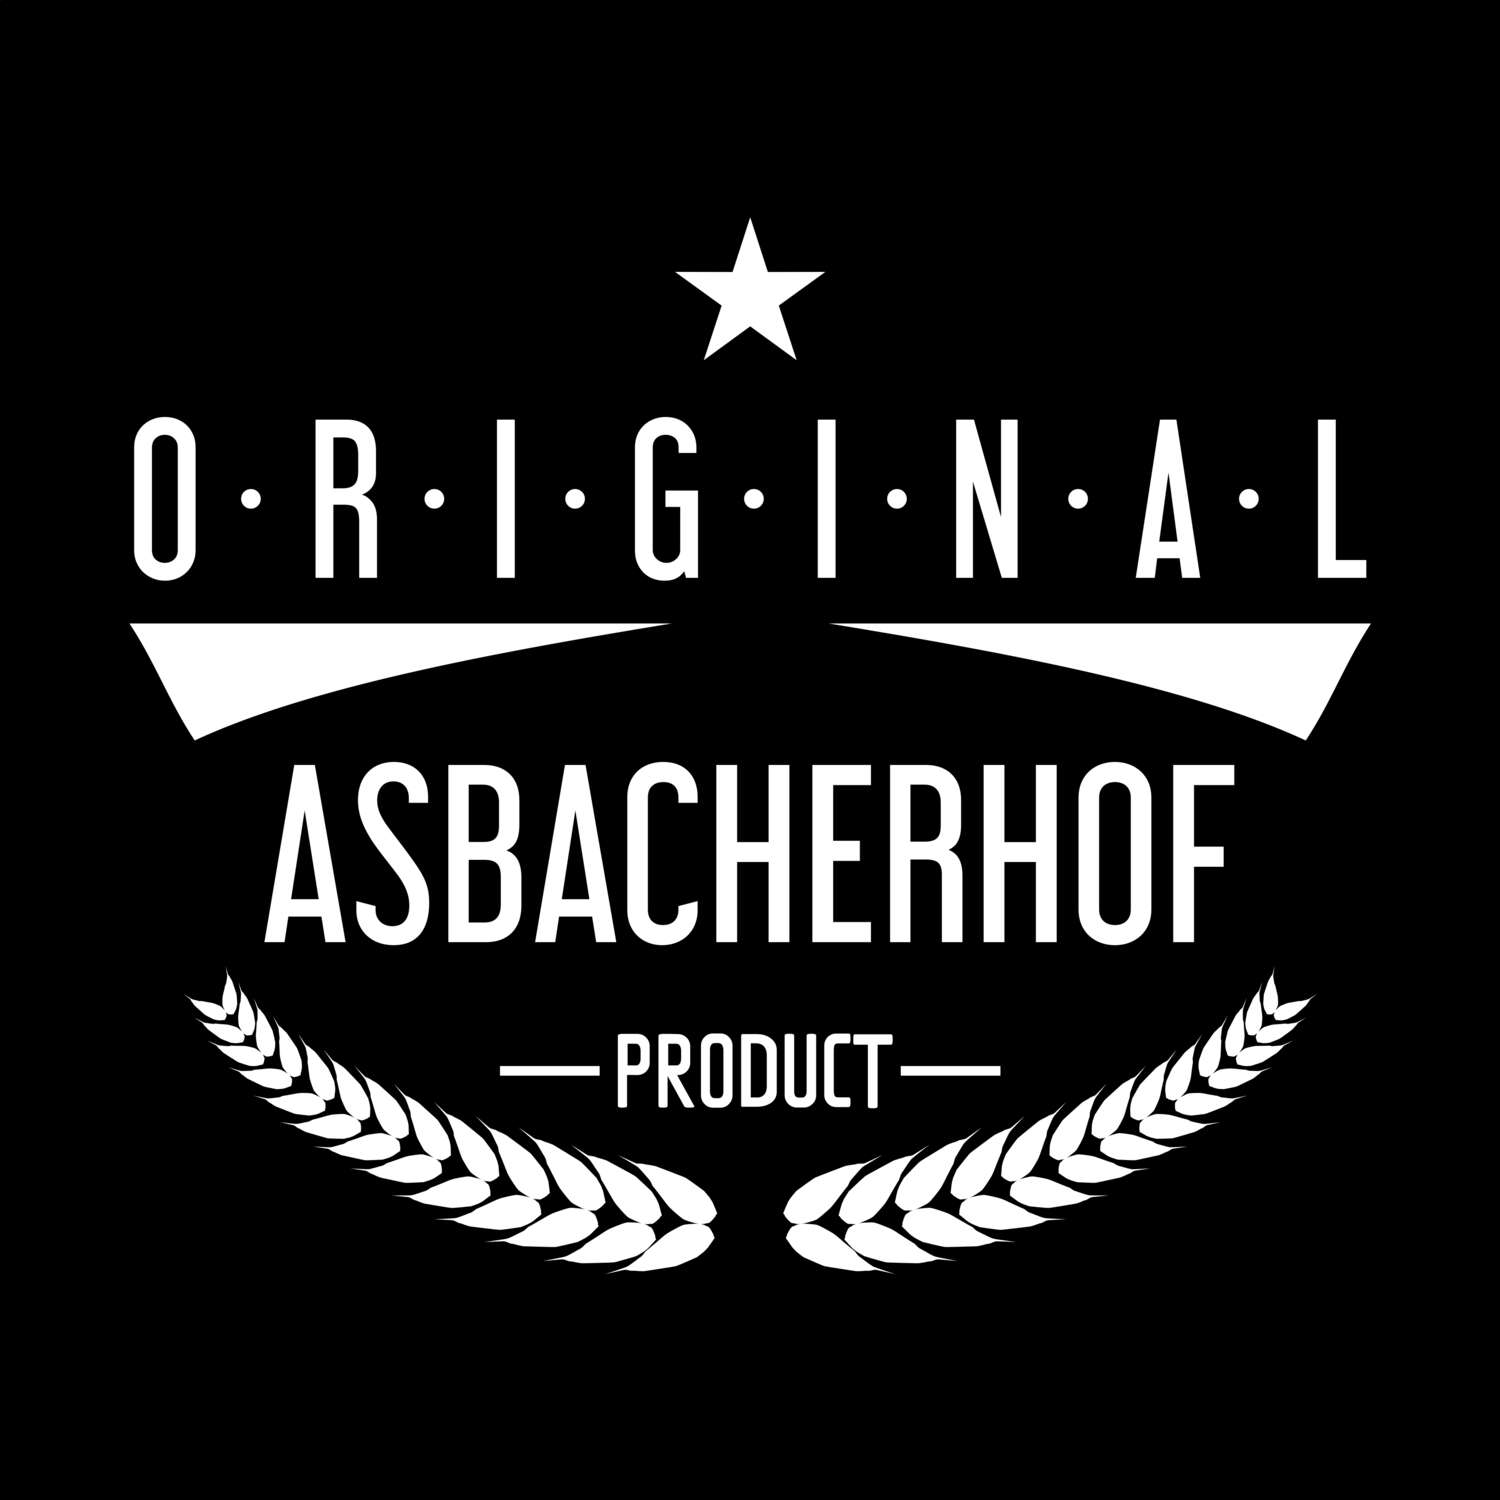 Asbacherhof T-Shirt »Original Product«